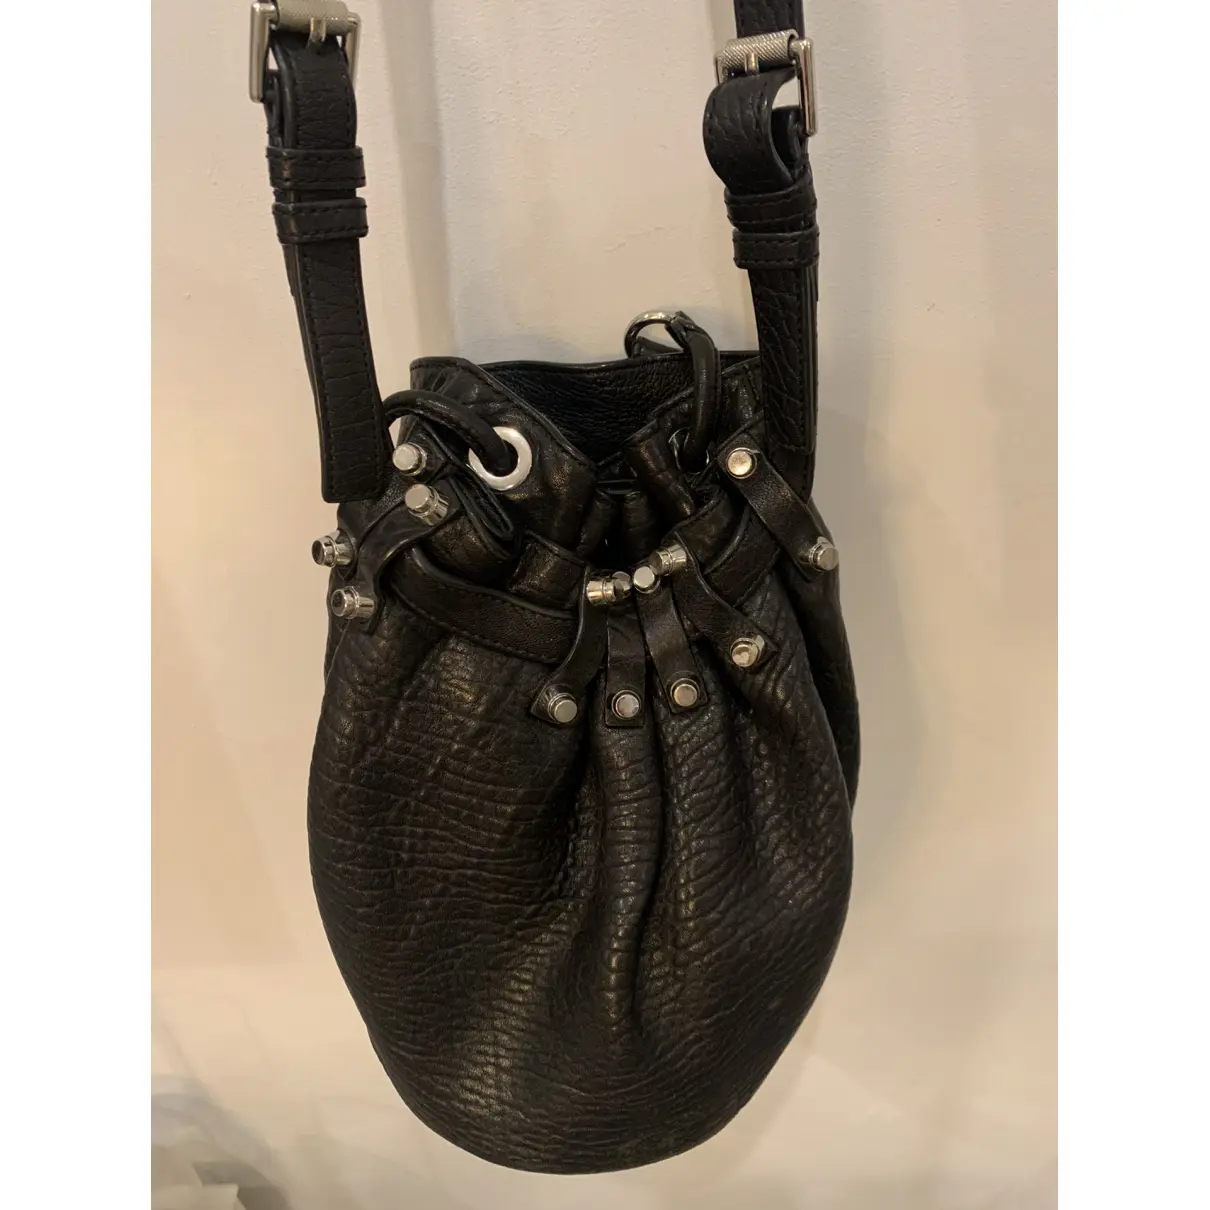 Buy Alexander Wang Diego leather handbag online